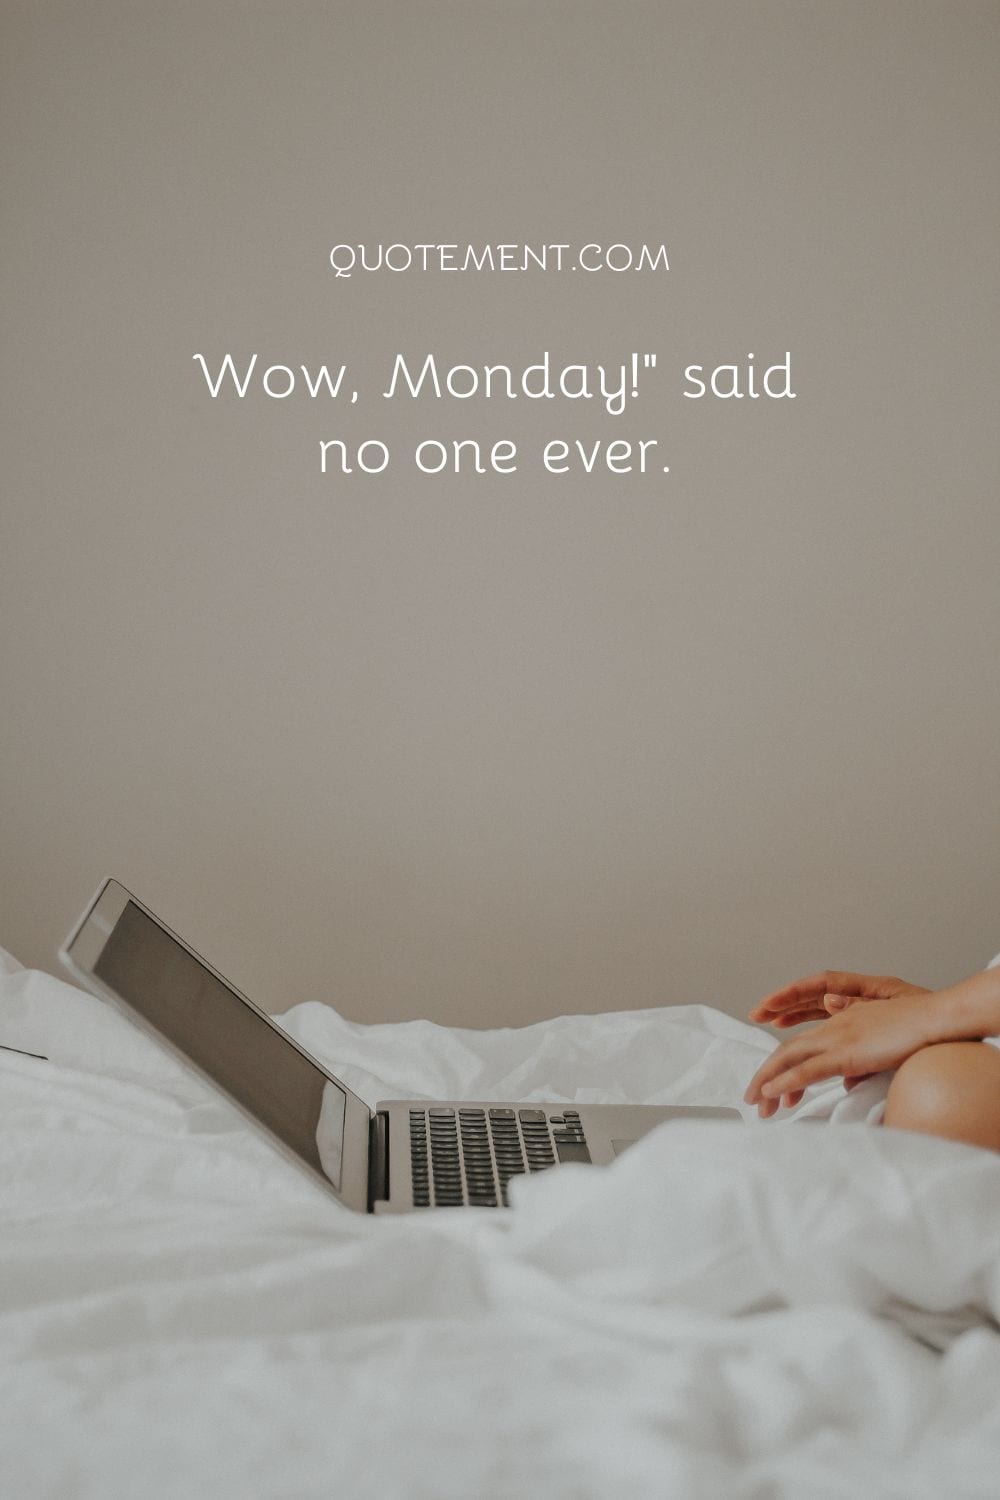 Wow, Monday!” said no one ever